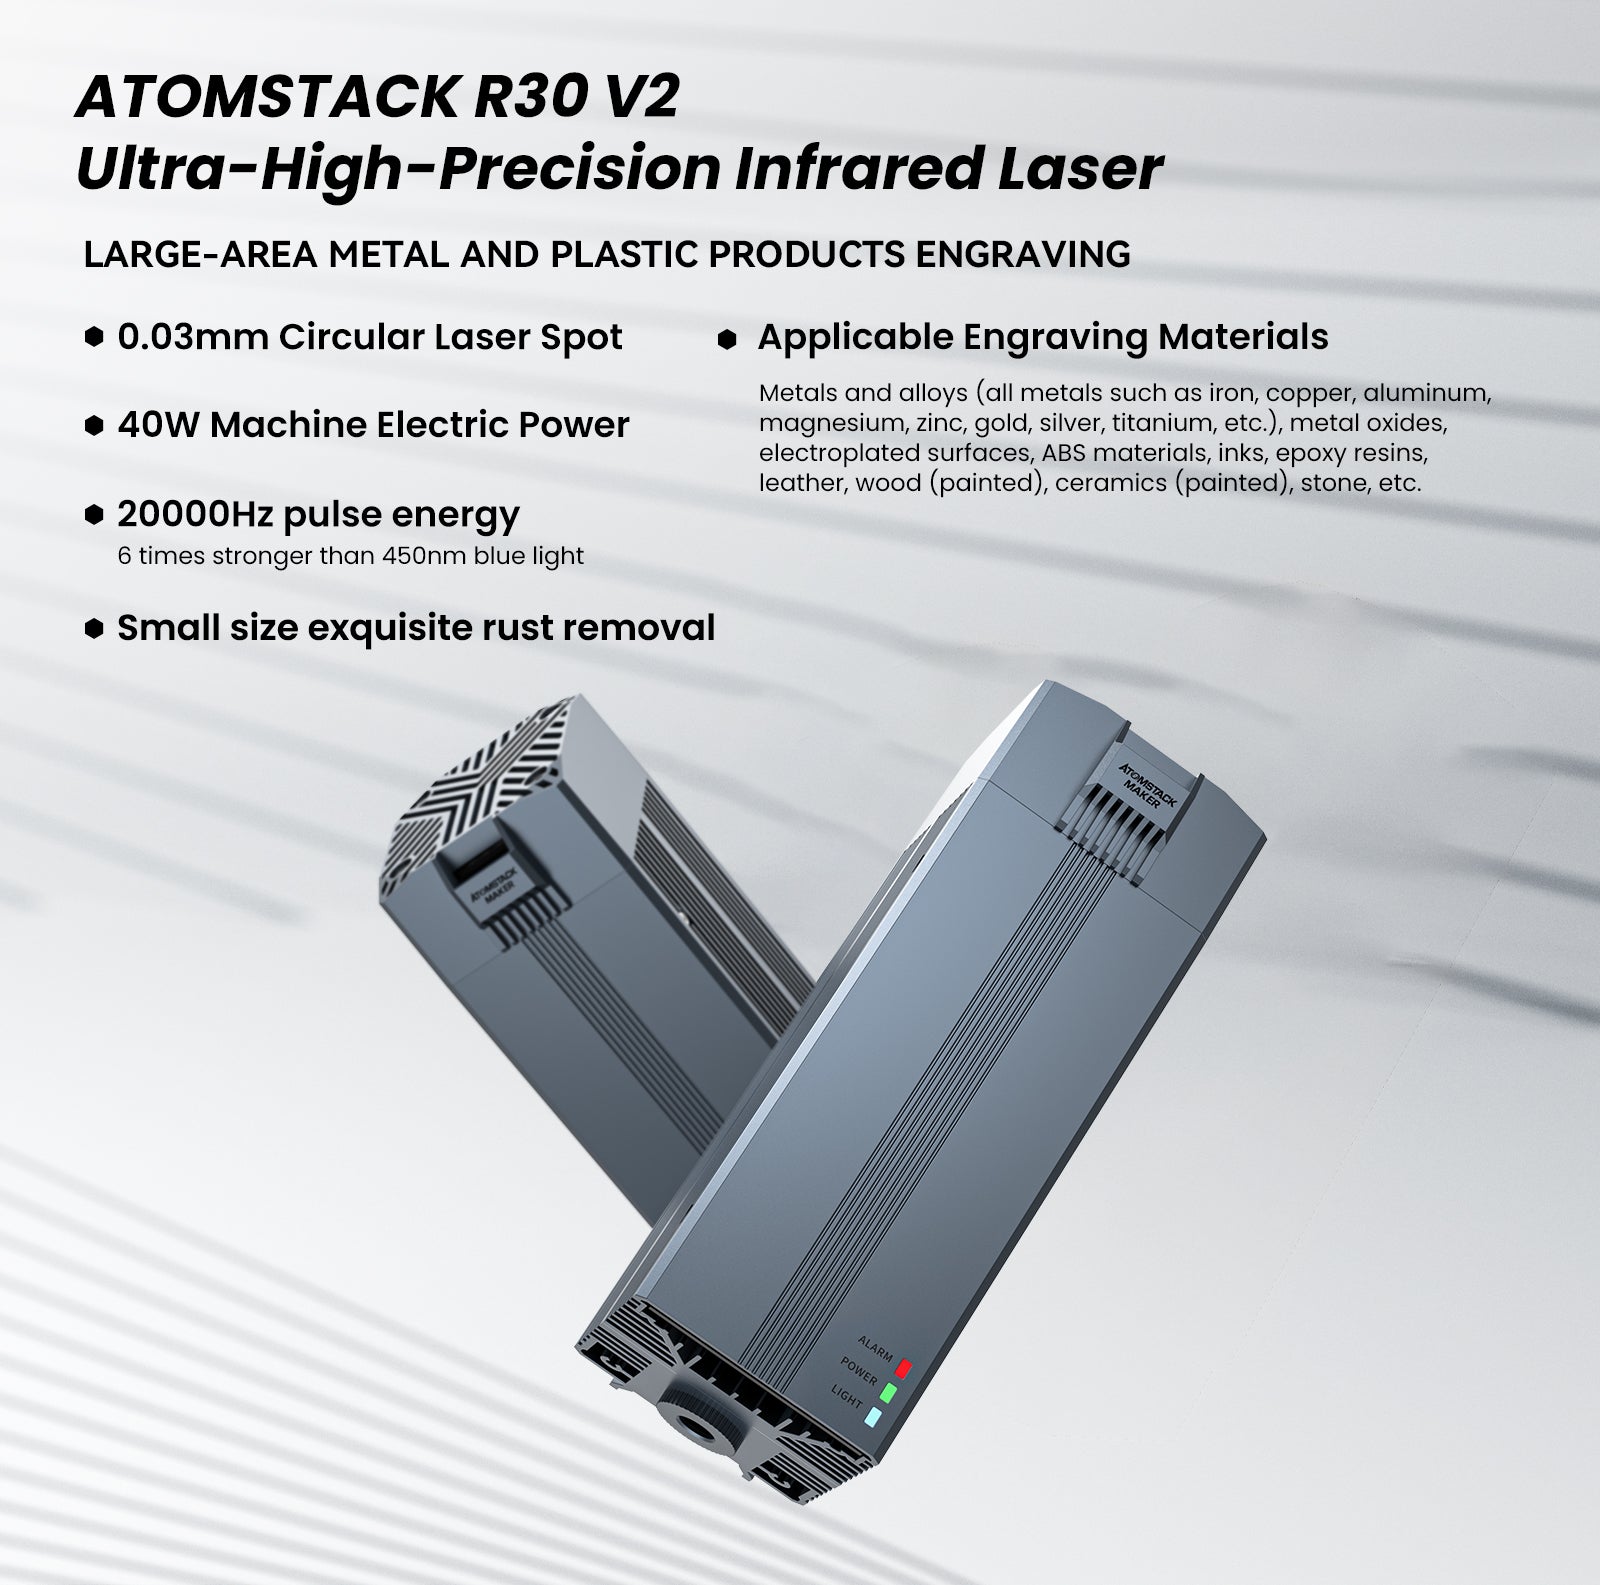 Atomstack R30 V2 Upgraded Infrared Laser Module 1064nm Laser for Engraving Metal and Plastic